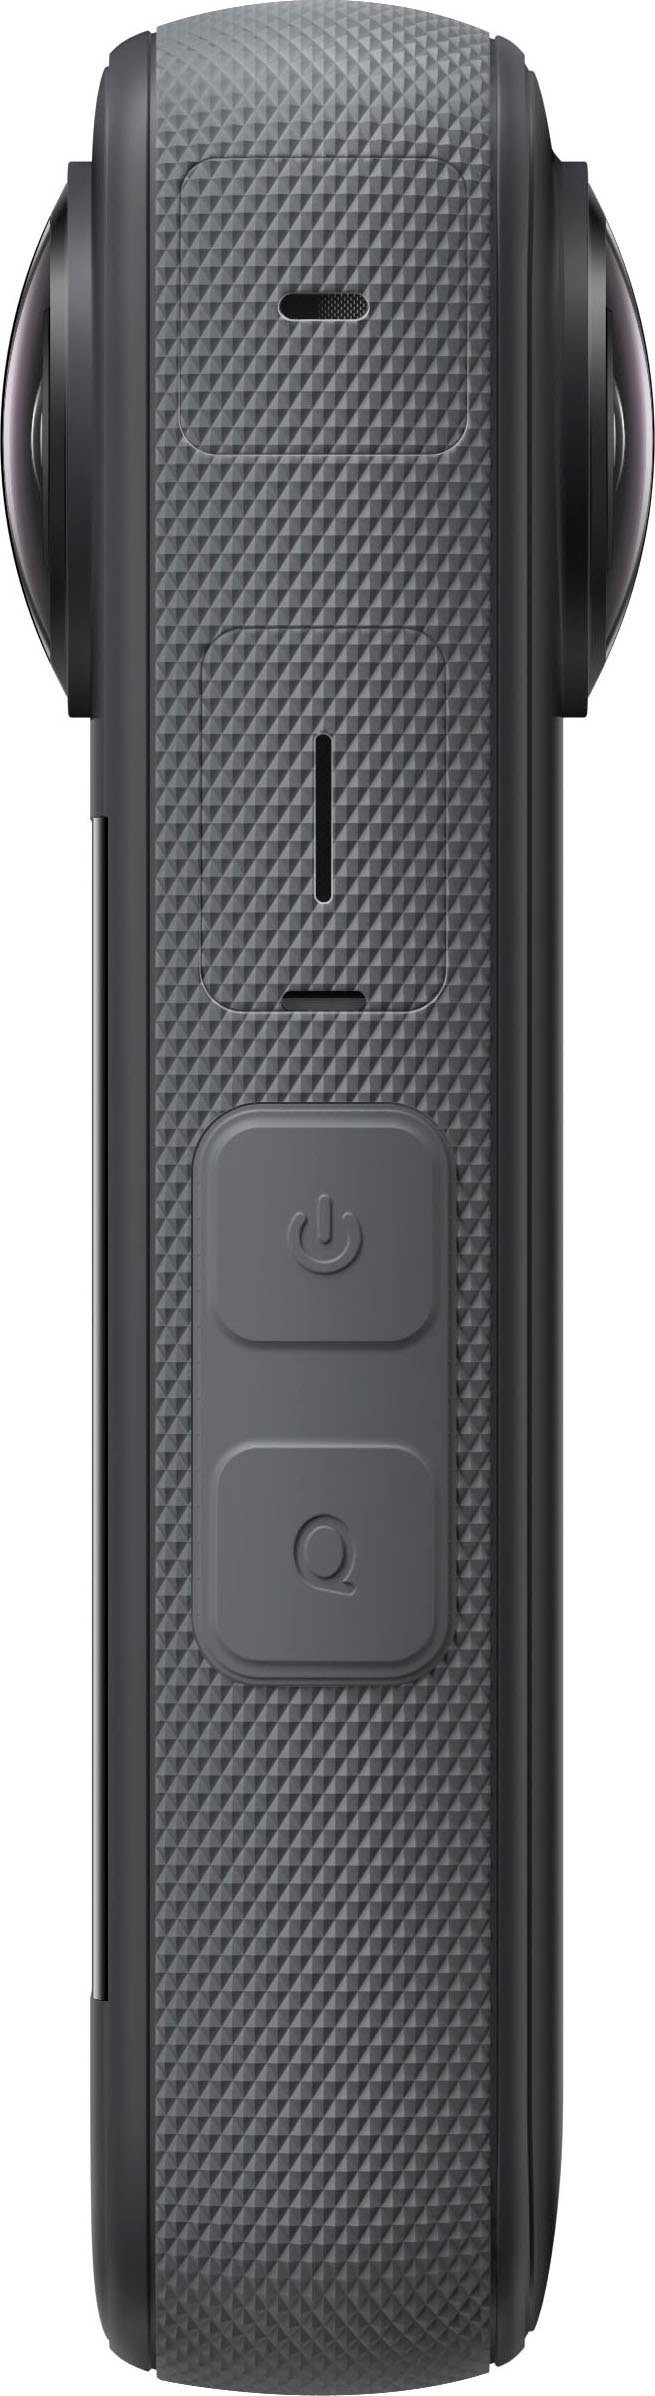 Insta360 Kit All-Purpose WLAN Bluetooth, X3 (Wi-Fi) Camcorder (5,7K,